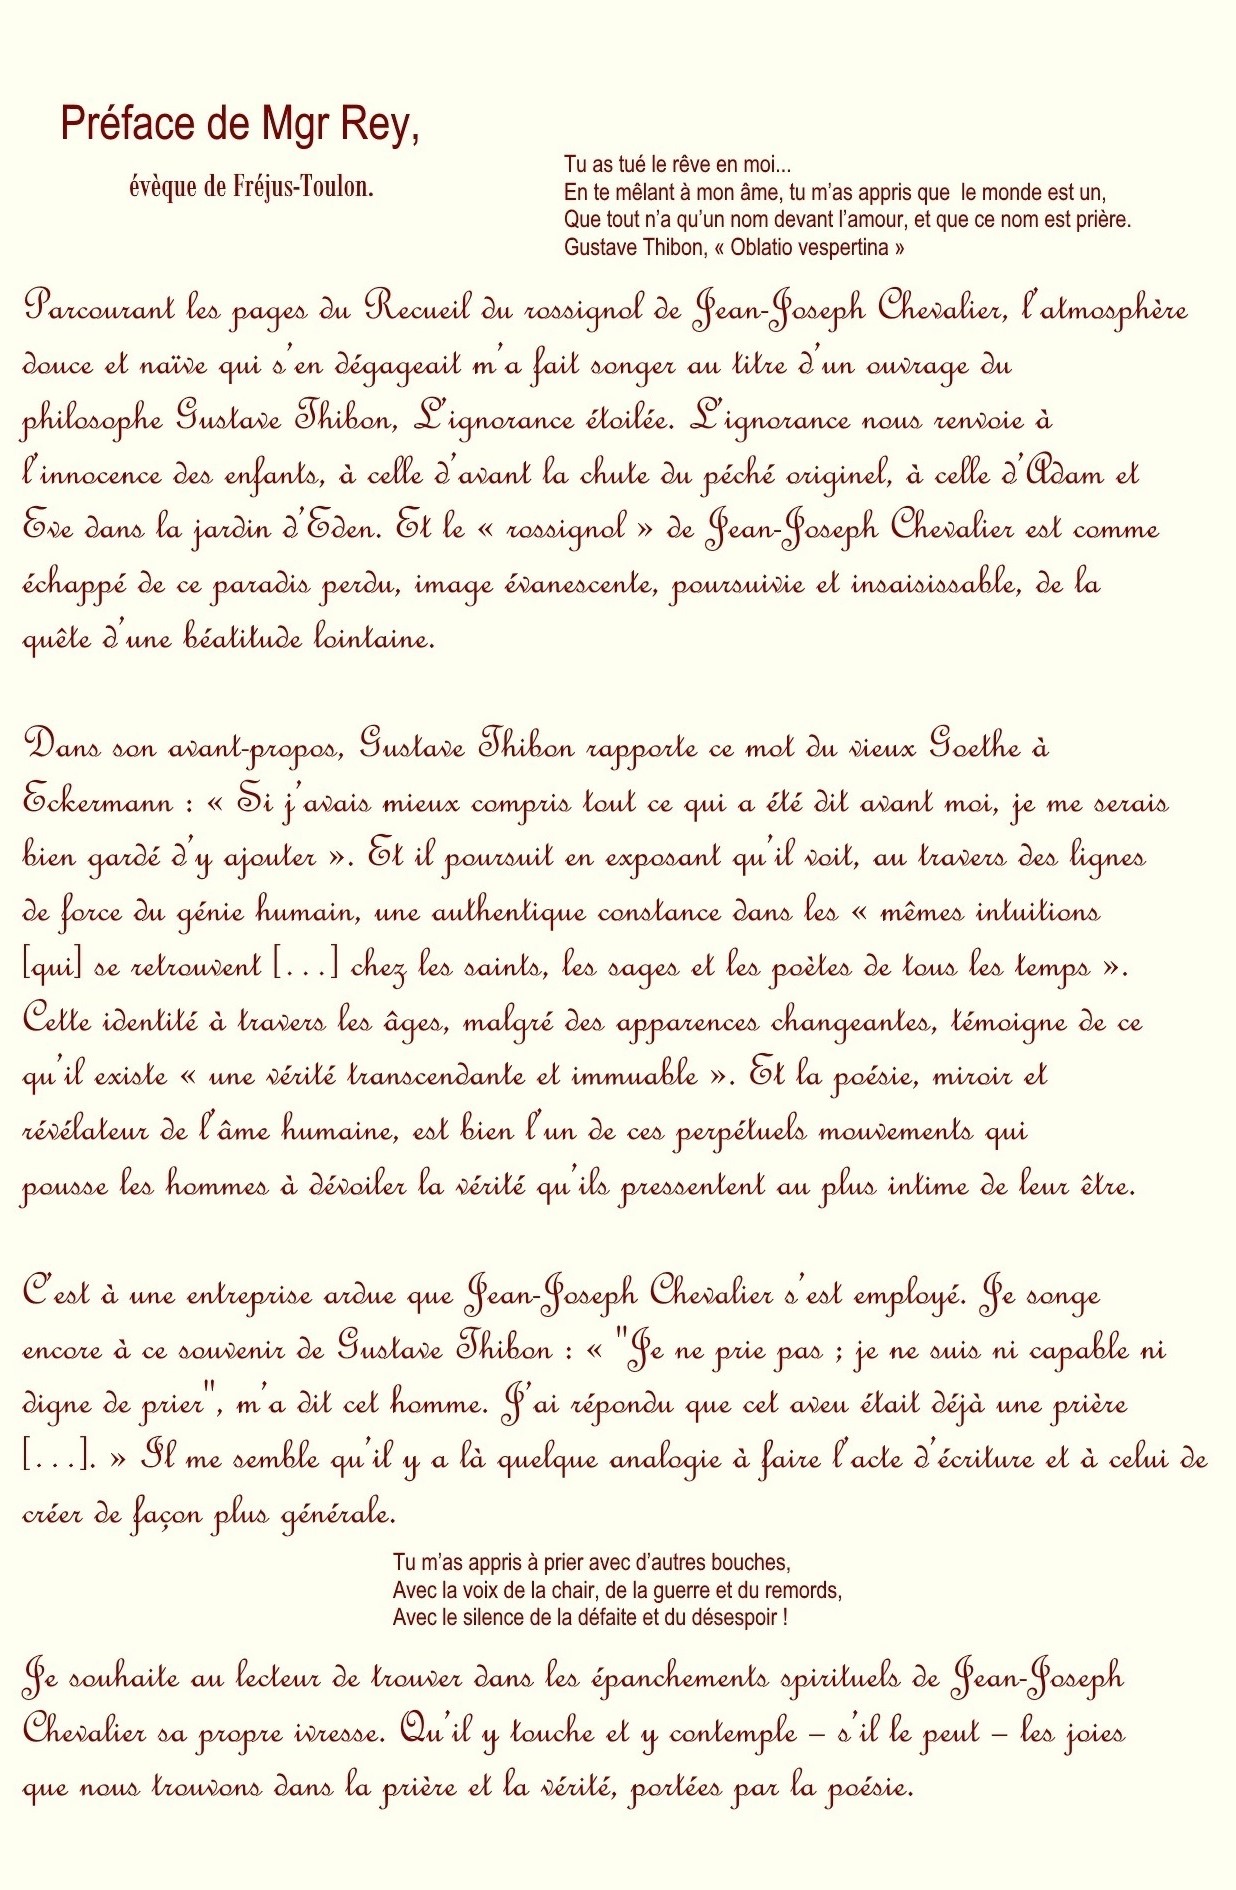 Recueil du rossignol poeme et sanguine de jean joseph chevalier 1